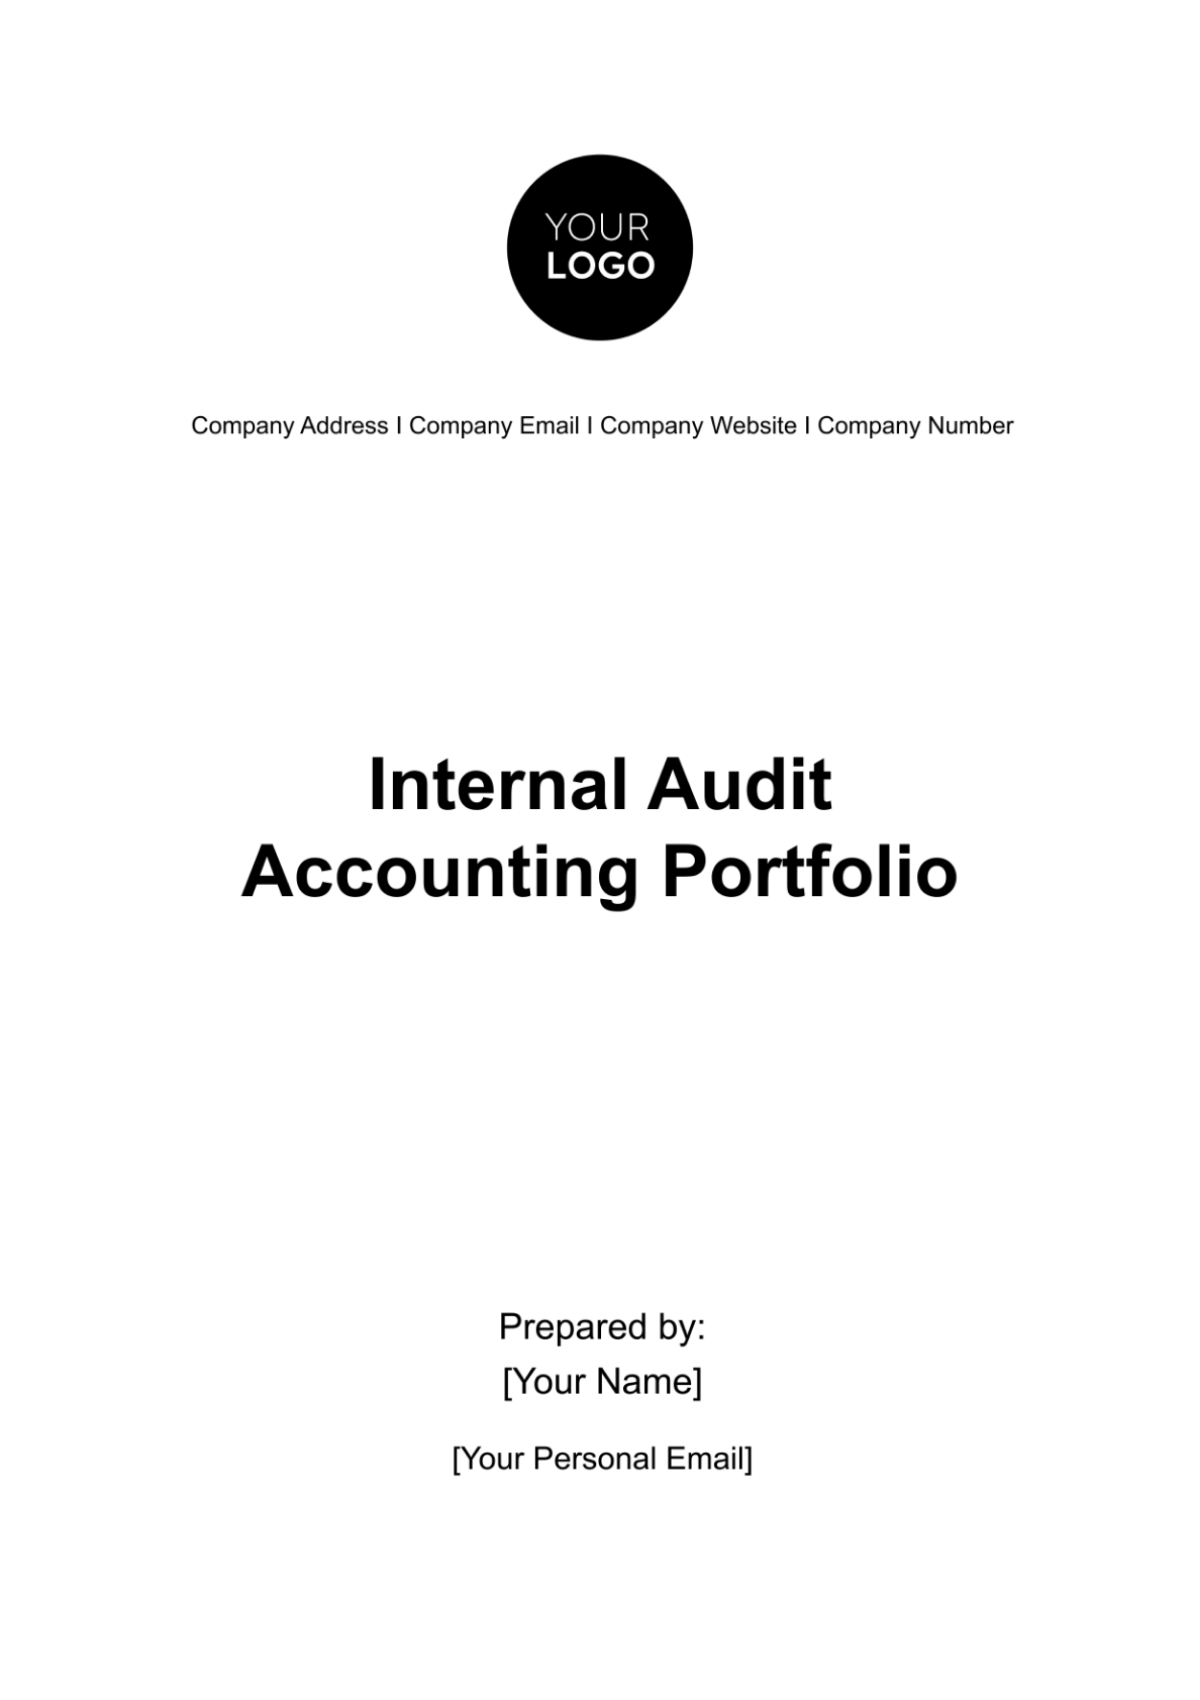 Internal Audit Accounting Portfolio Template